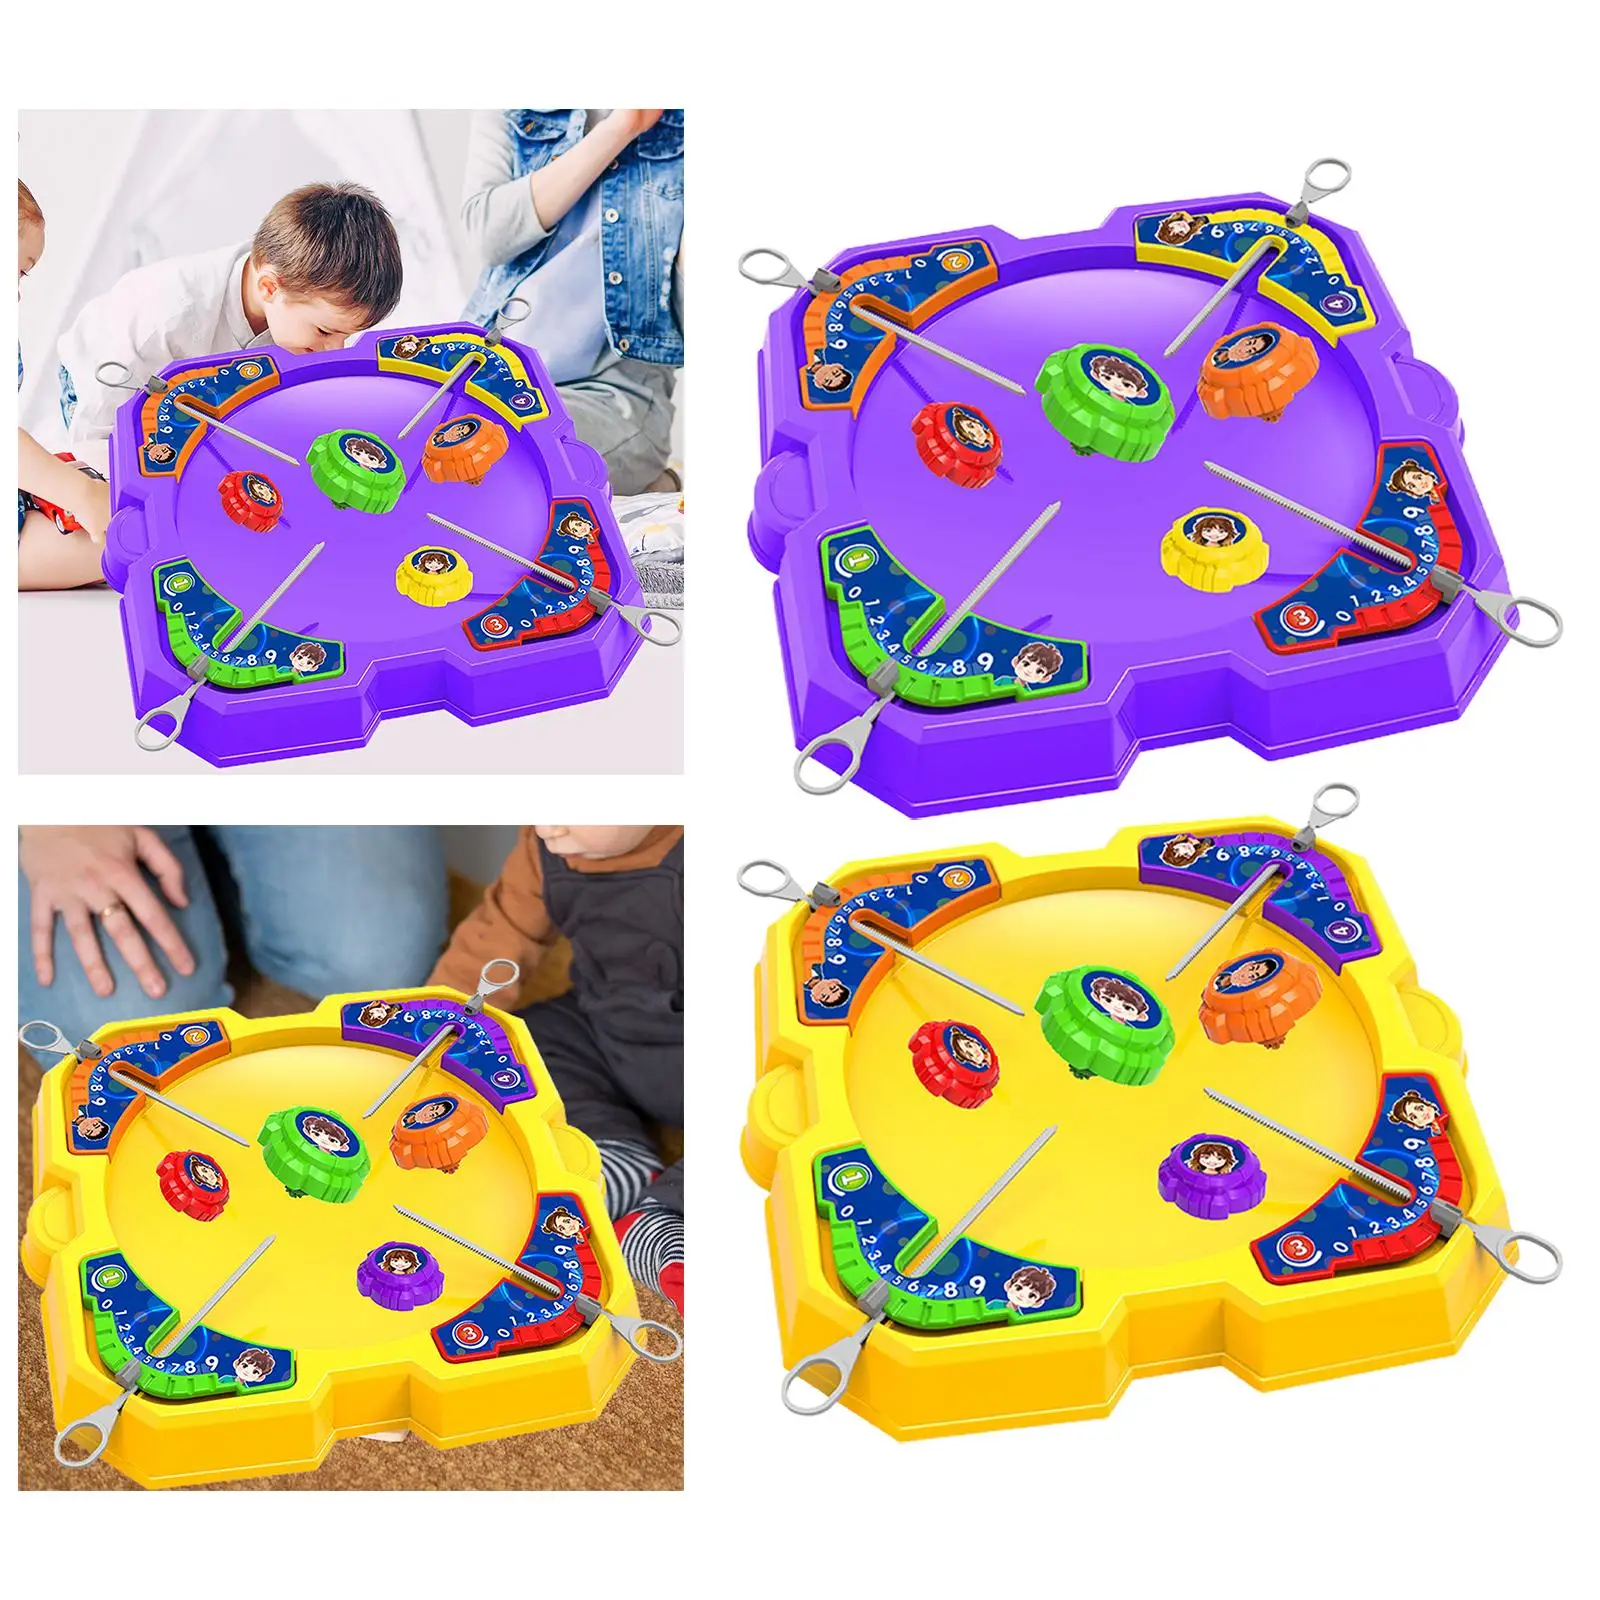 Gyro Toy Set Developmental Toy Wear Resistant Strategy Game for Kindergarten